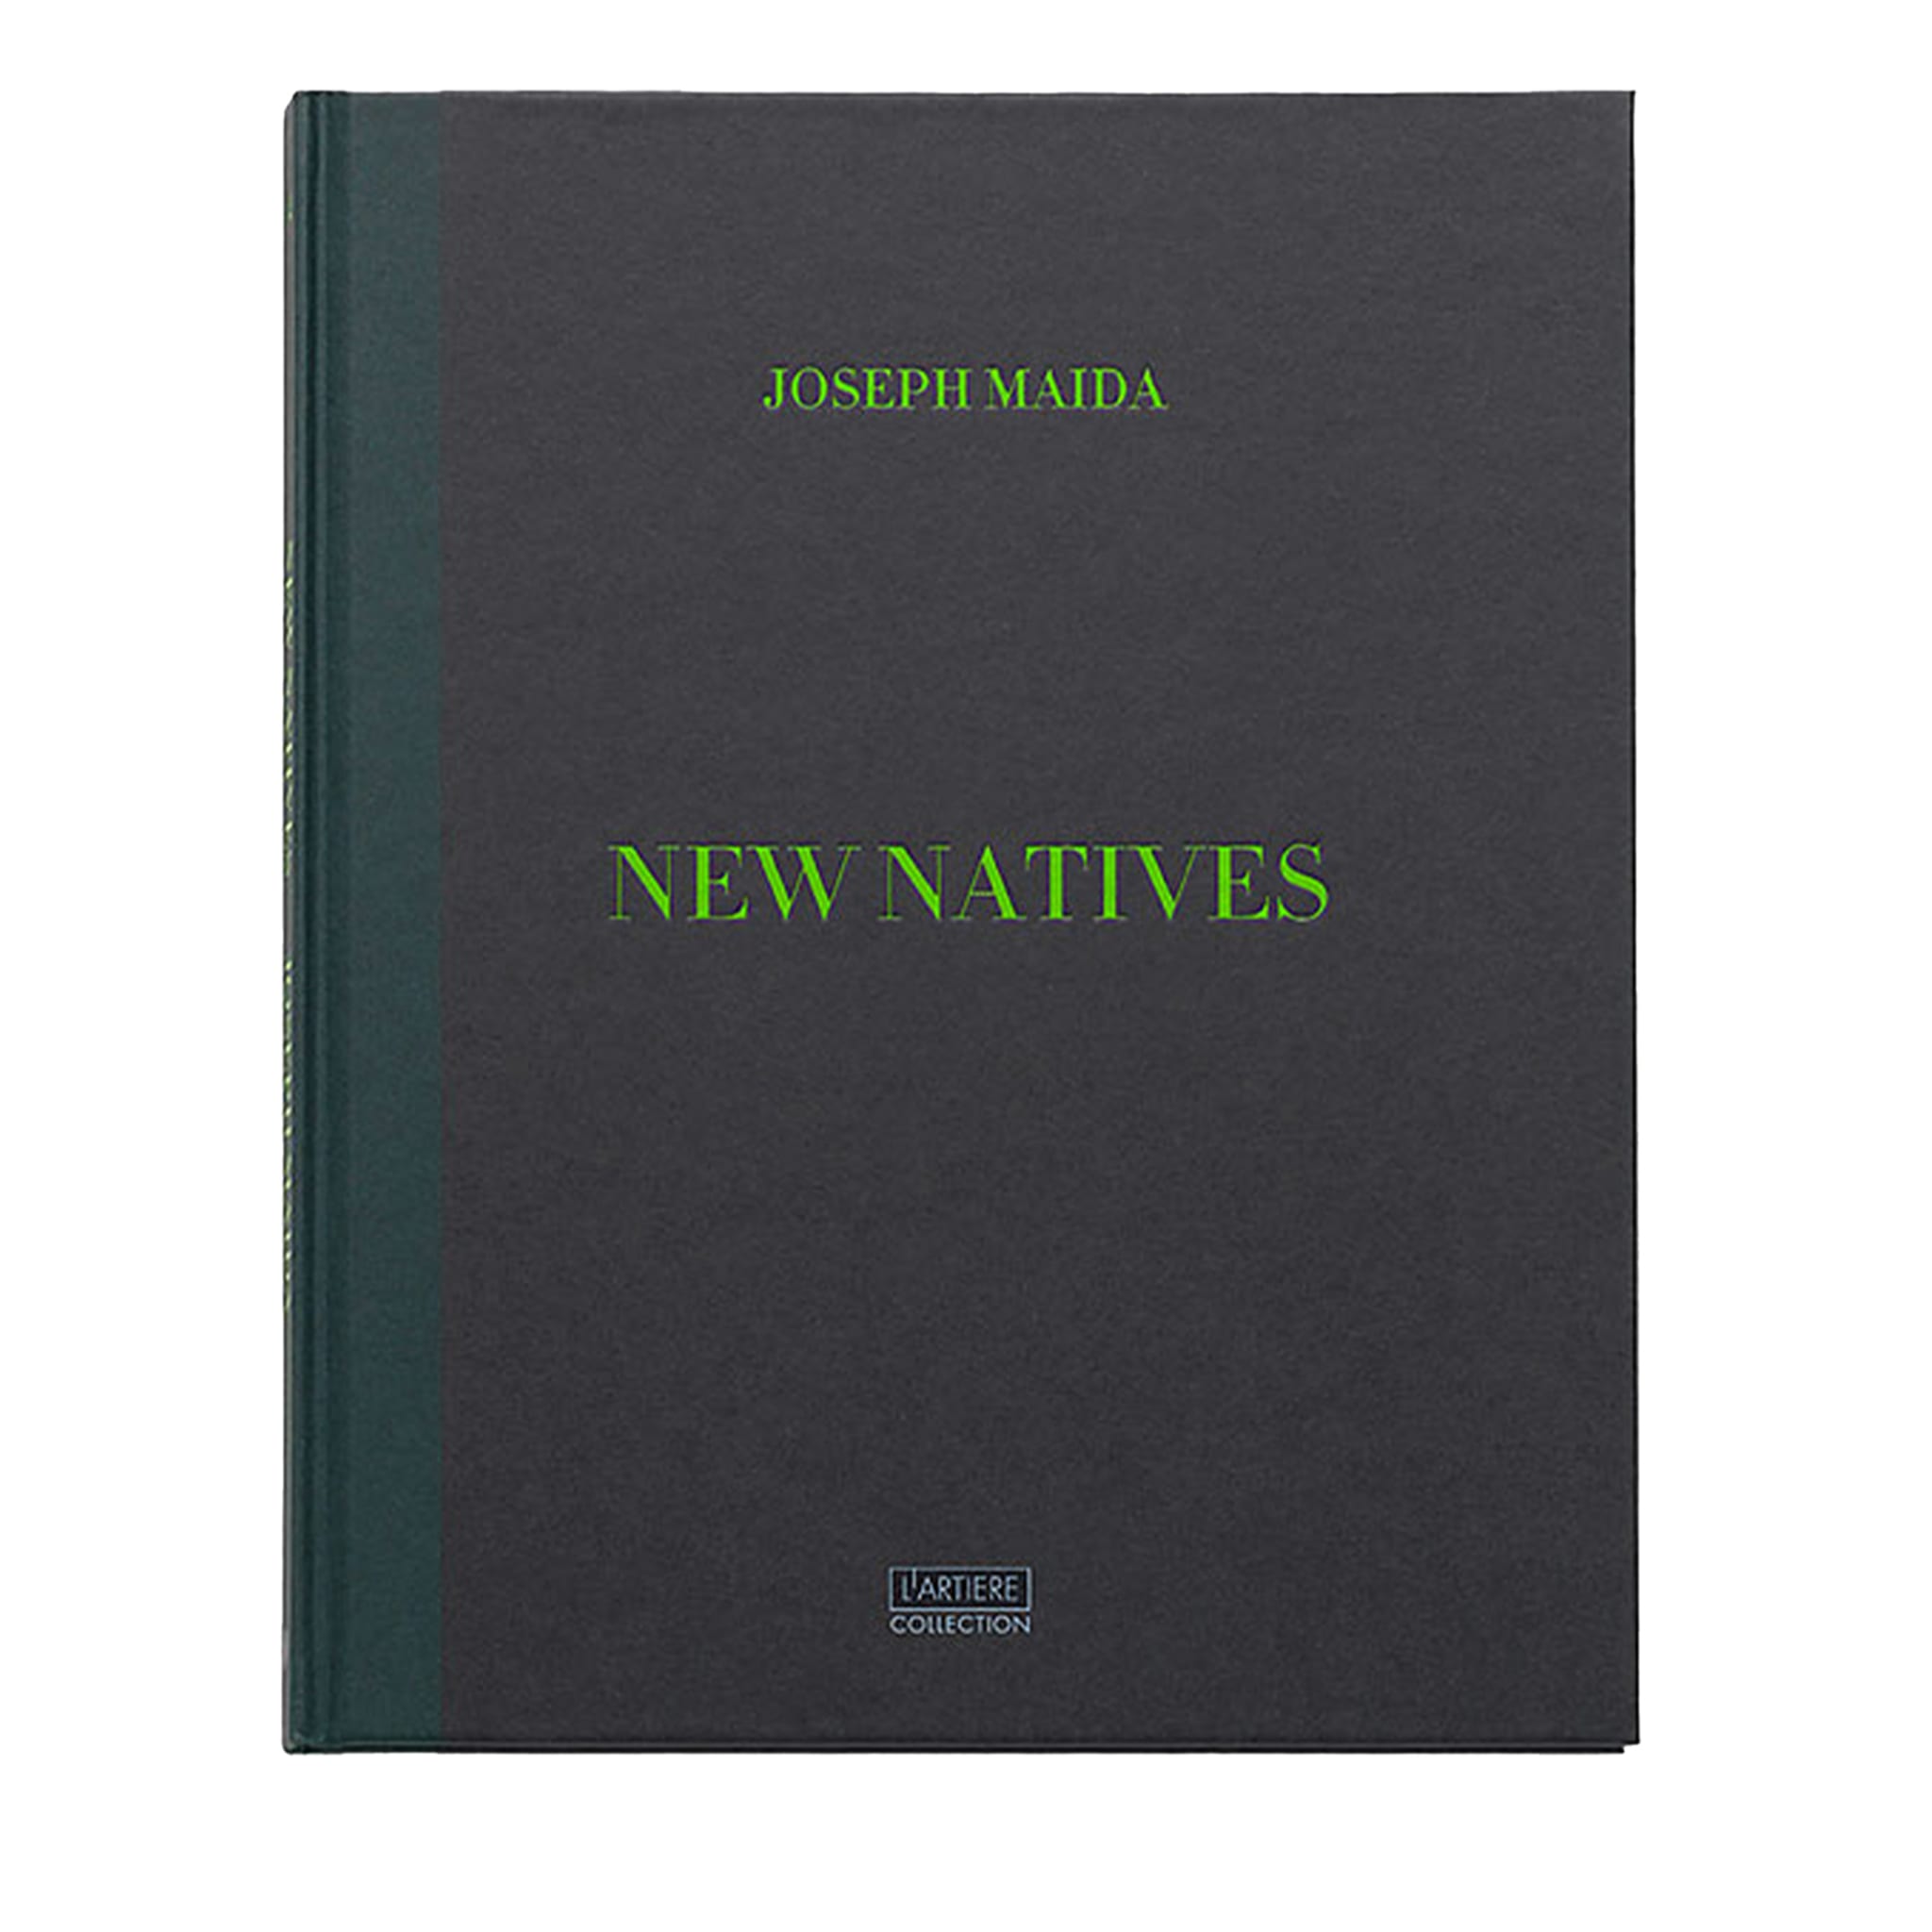 New Natives - Sonderausgabe Box Set - Joseph Maida - Hauptansicht